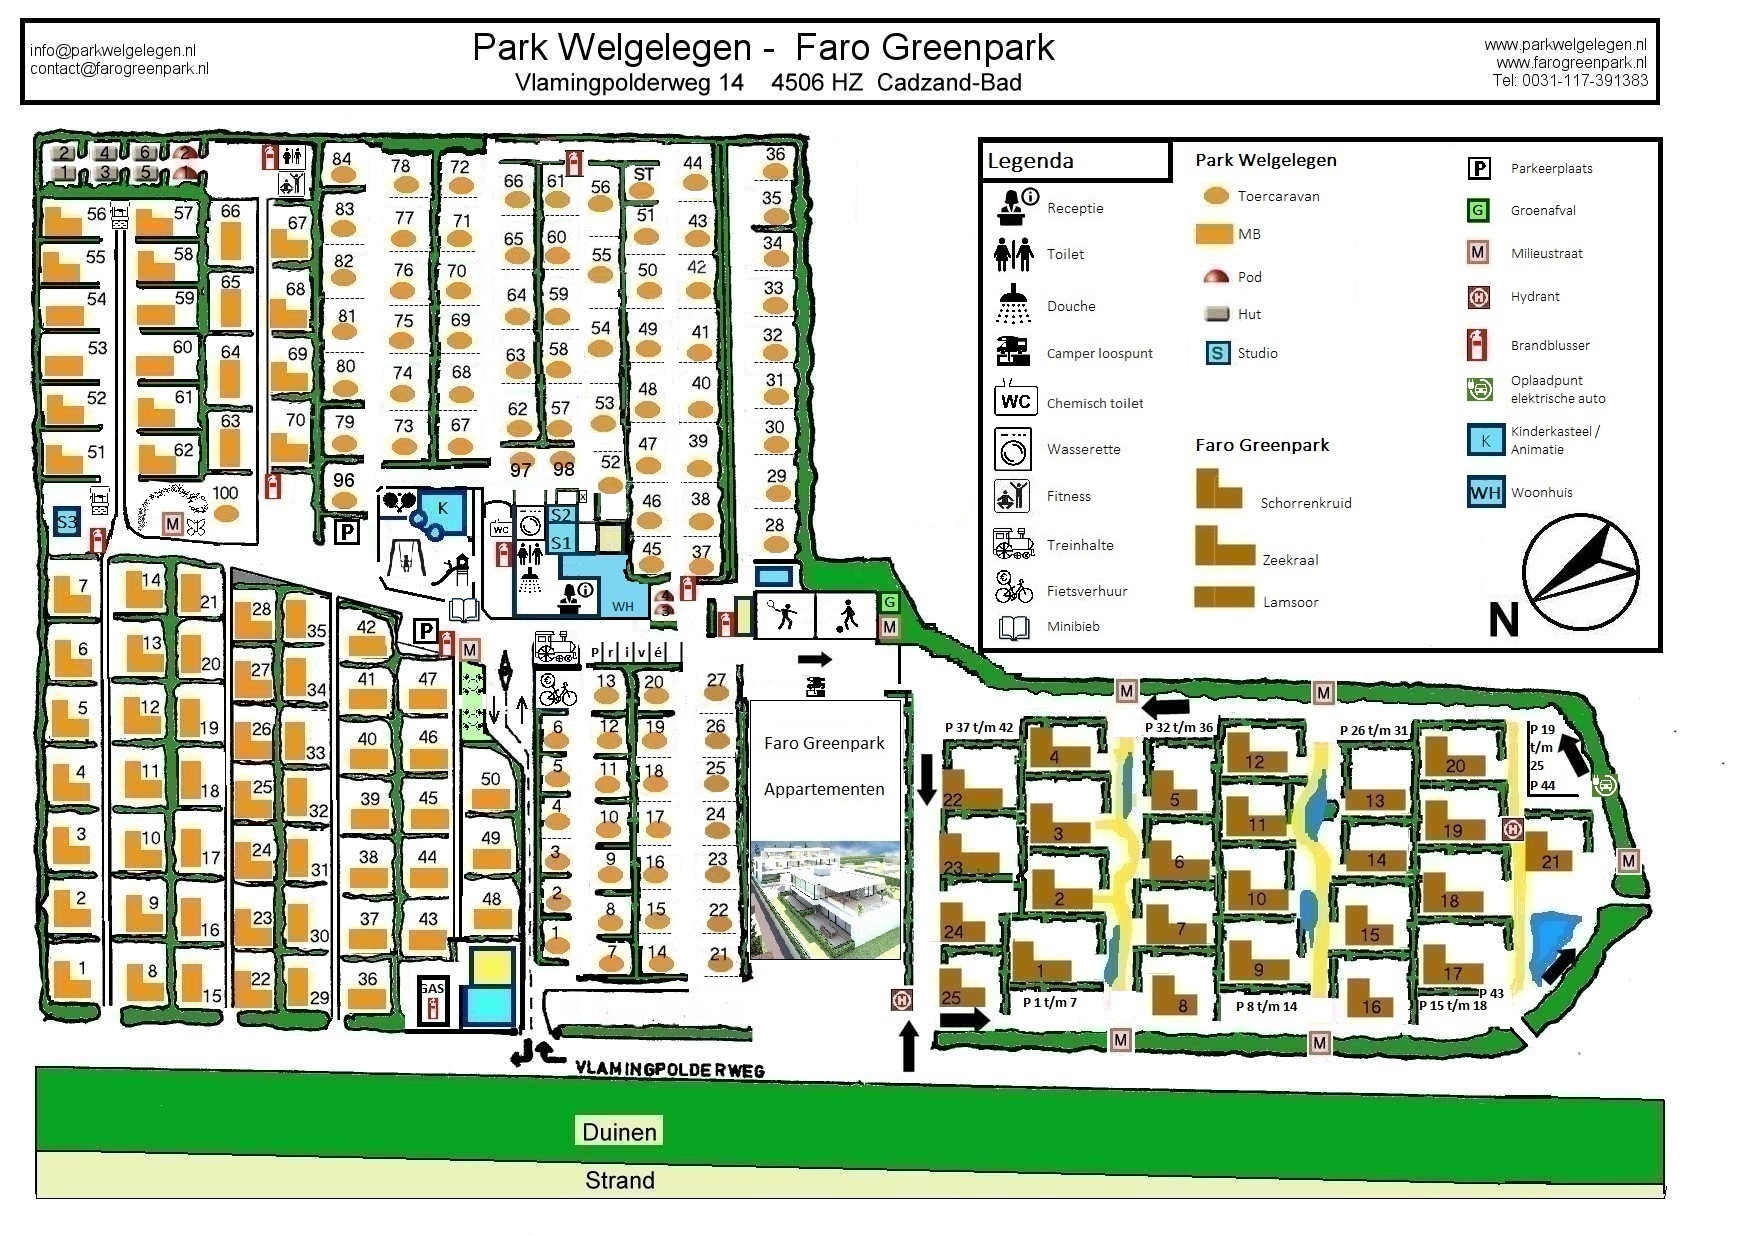 Plattegrond Park Welgelegen en Faro Greenpark